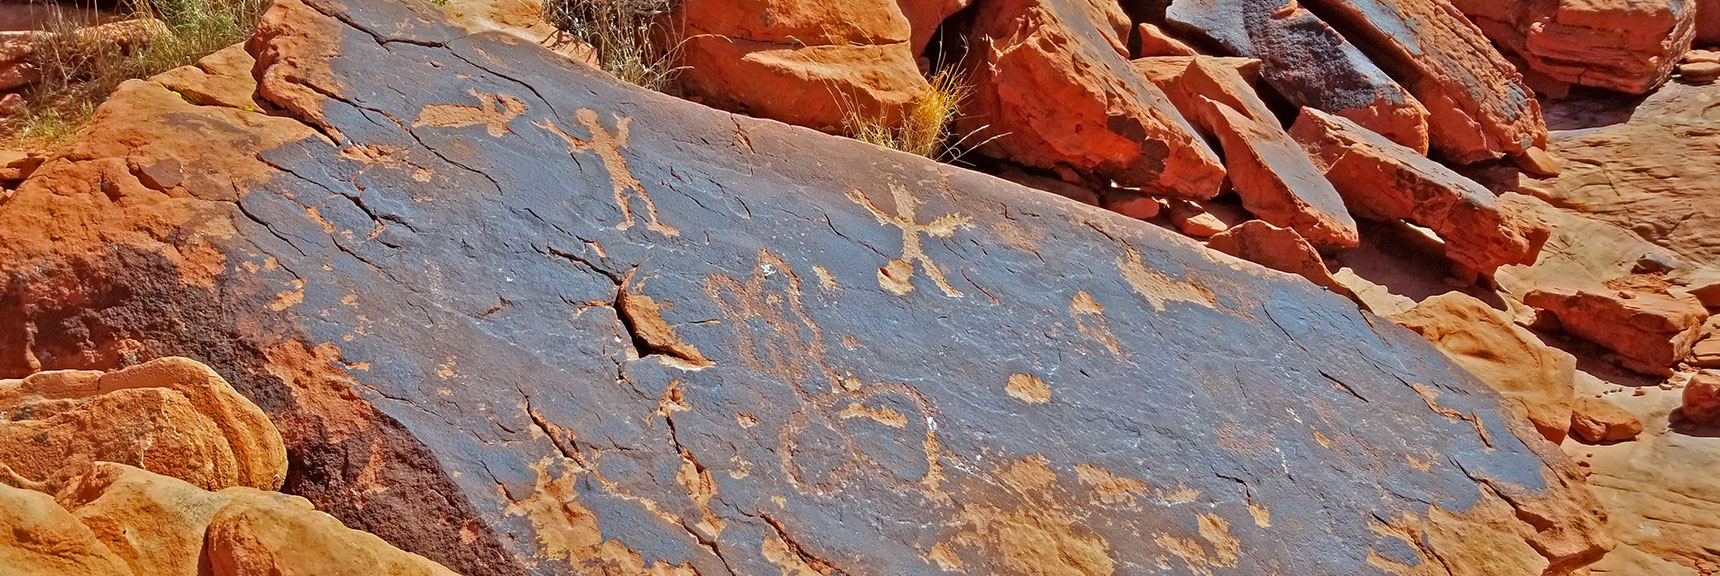 Possibly Modern Graffiti Petroglyph Attempts | Little Red Rock Las Vegas, Nevada, Near La Madre Mountains Wilderness